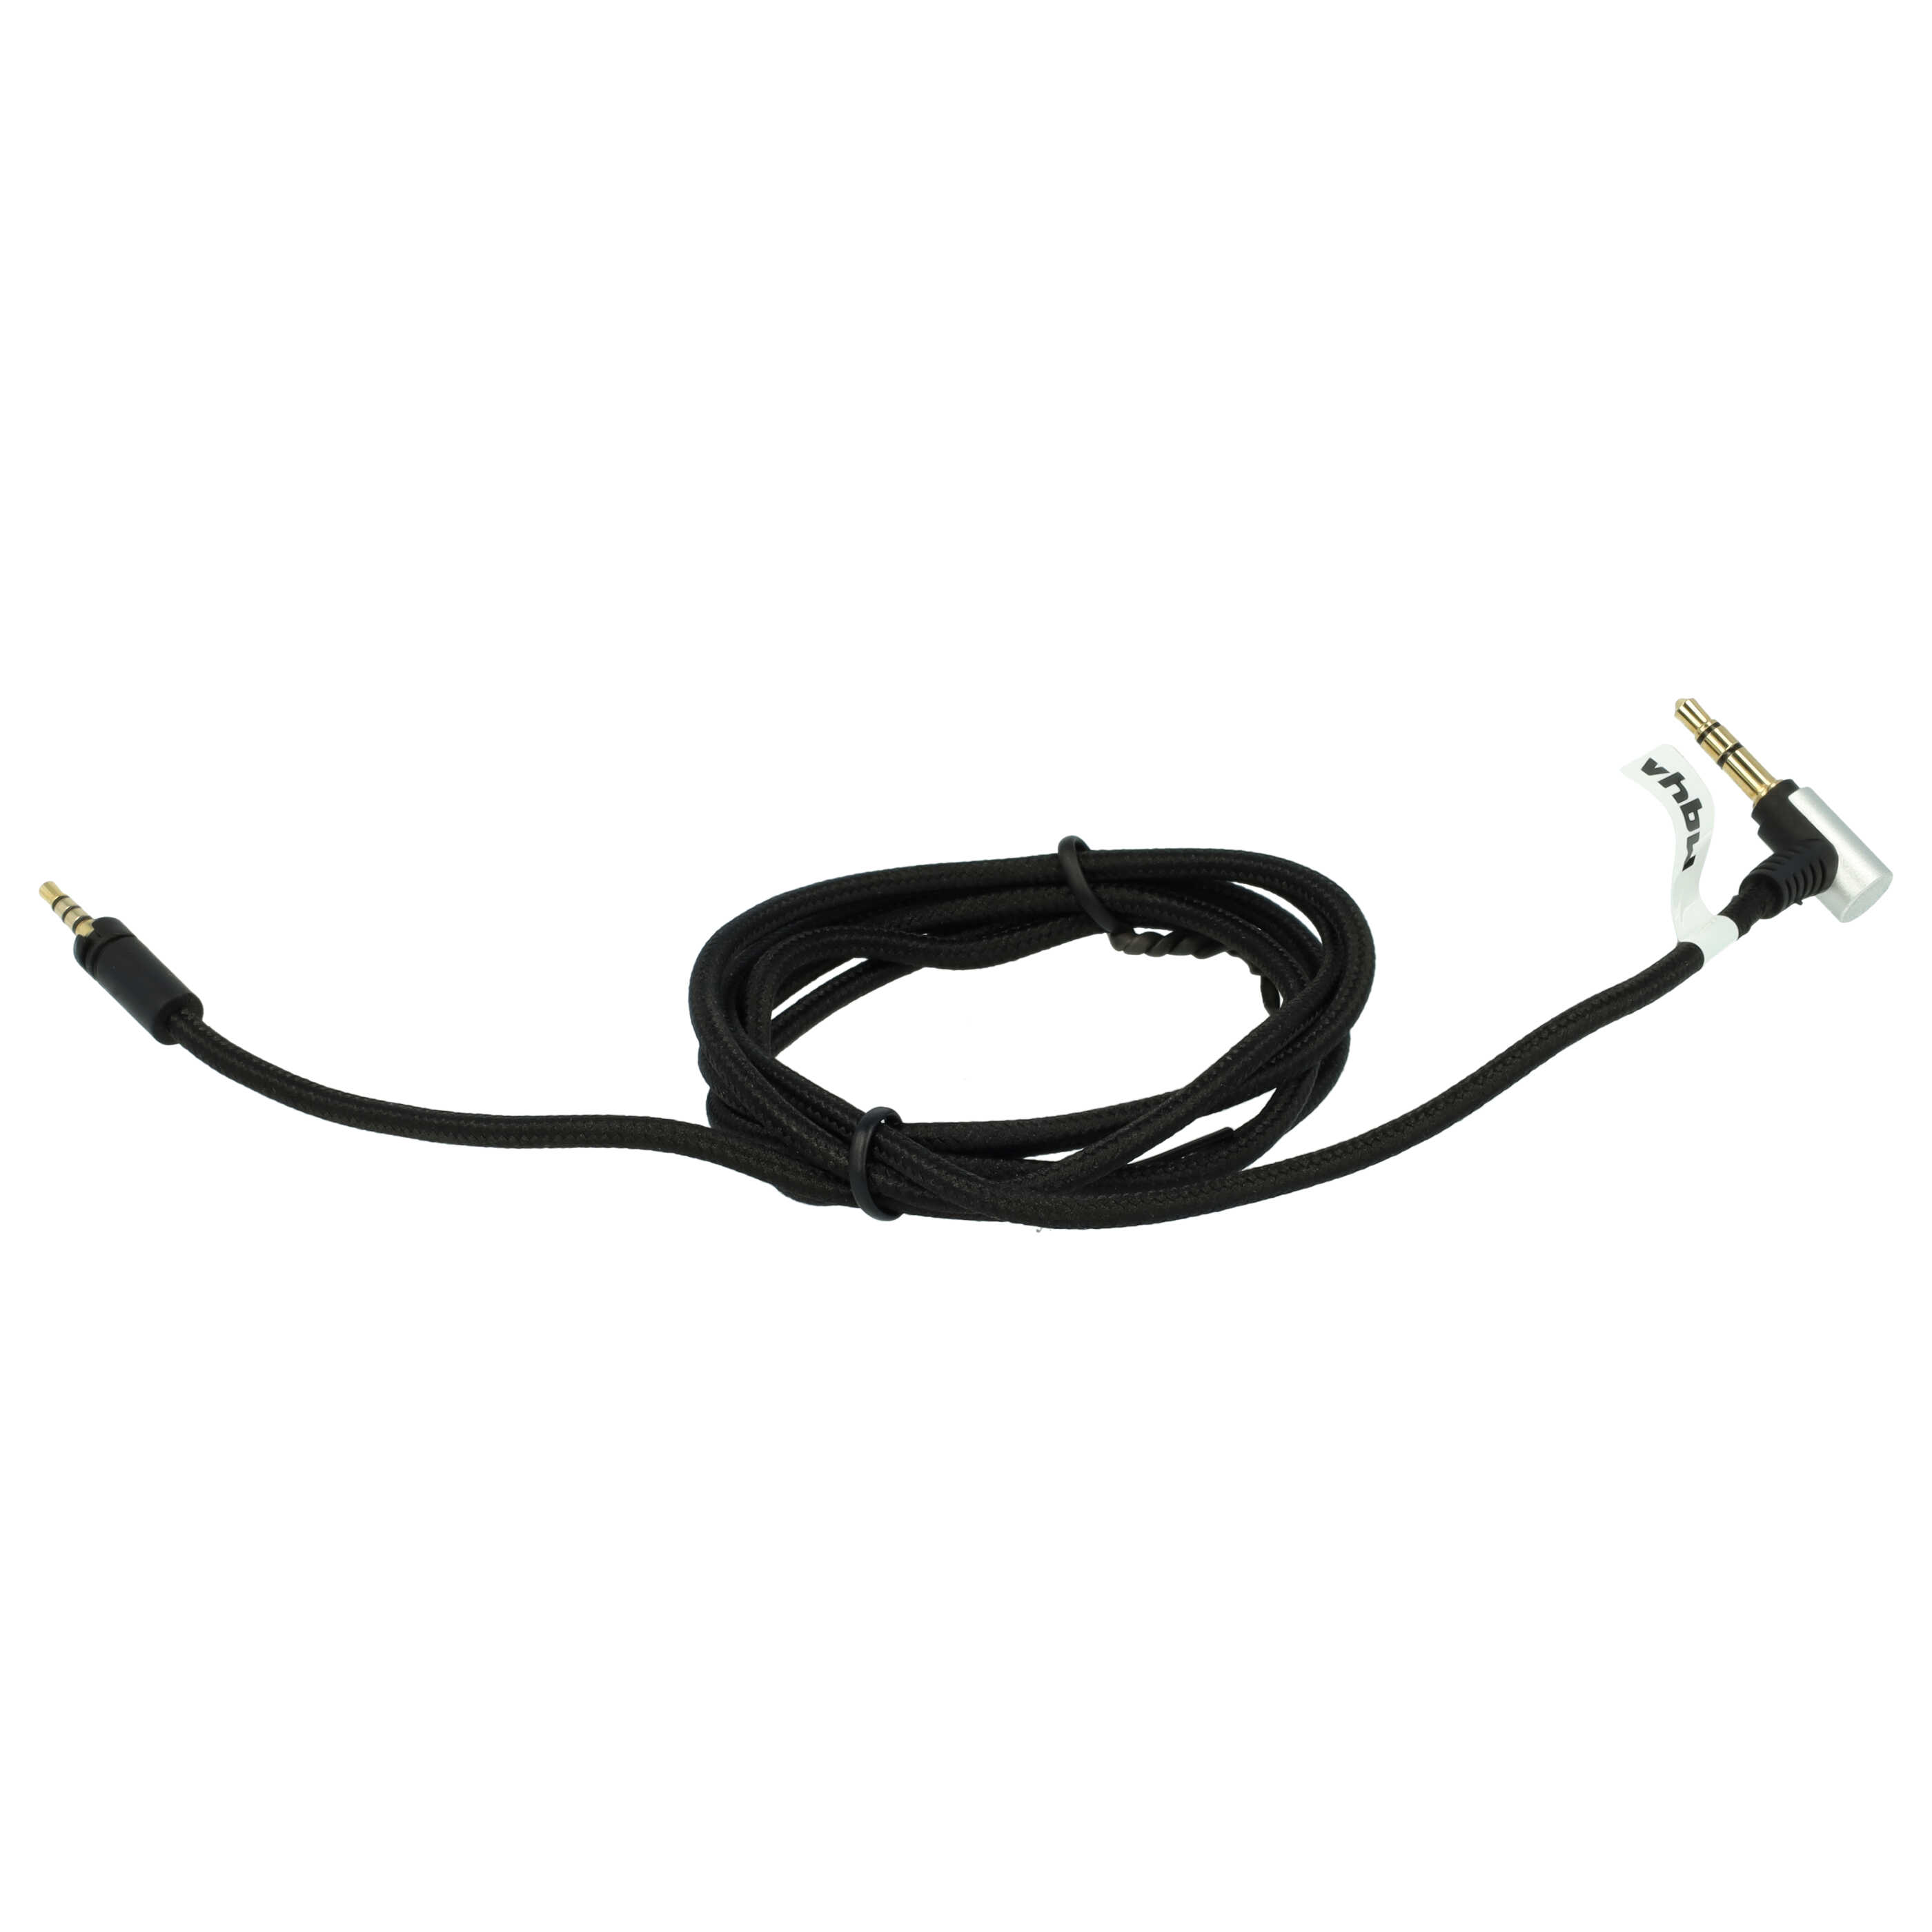 Cable audio AUX a conector jack de 3,5 mm reemplaza Sennheiser 564549 para auriculares Sennheiser